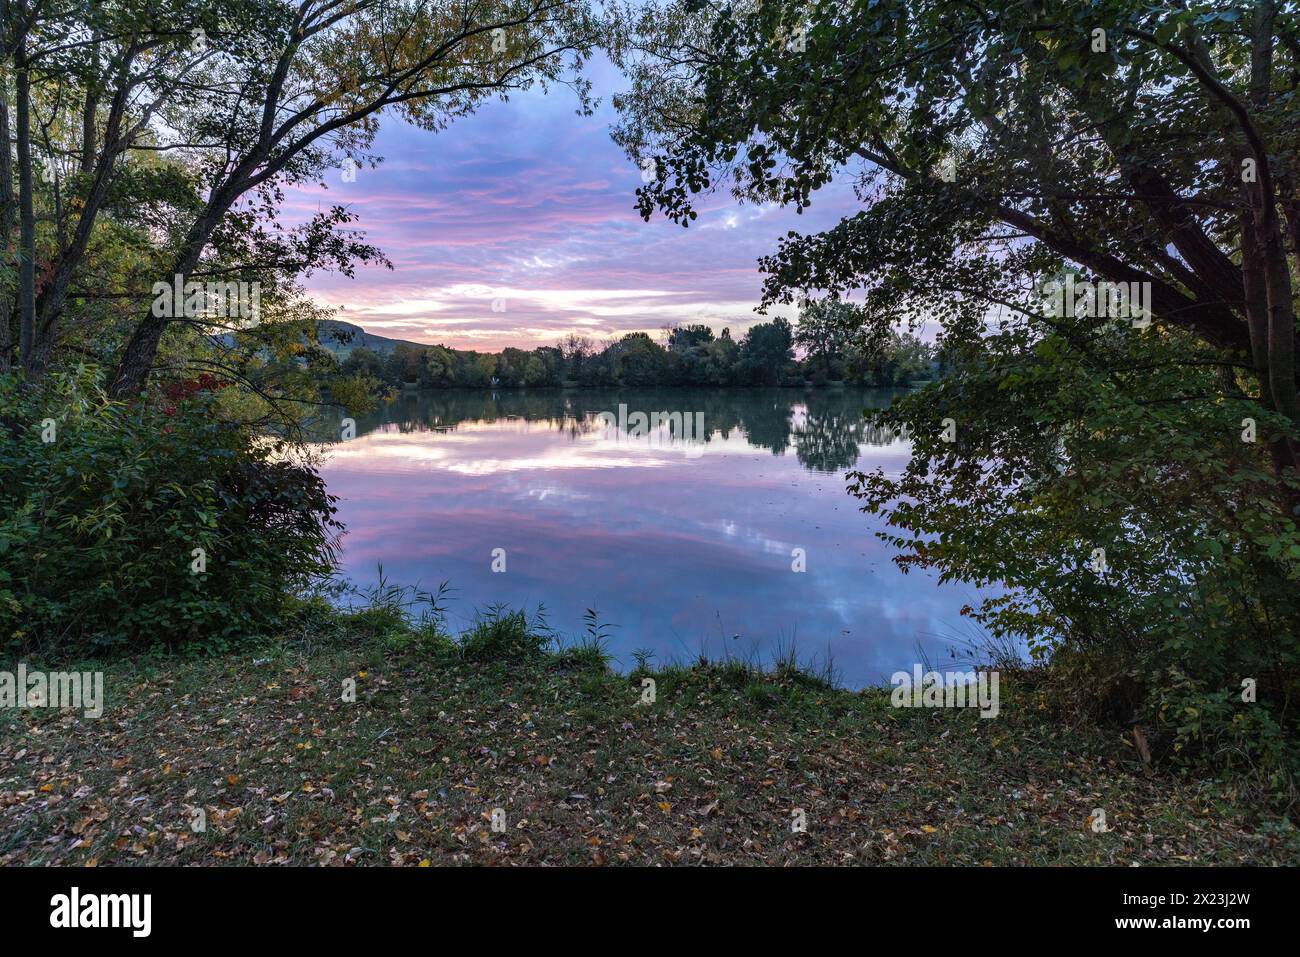 Morning at the city lake, Kitzingen, Lower Franconia, Franconia, Bavaria, Germany, Europe Stock Photo